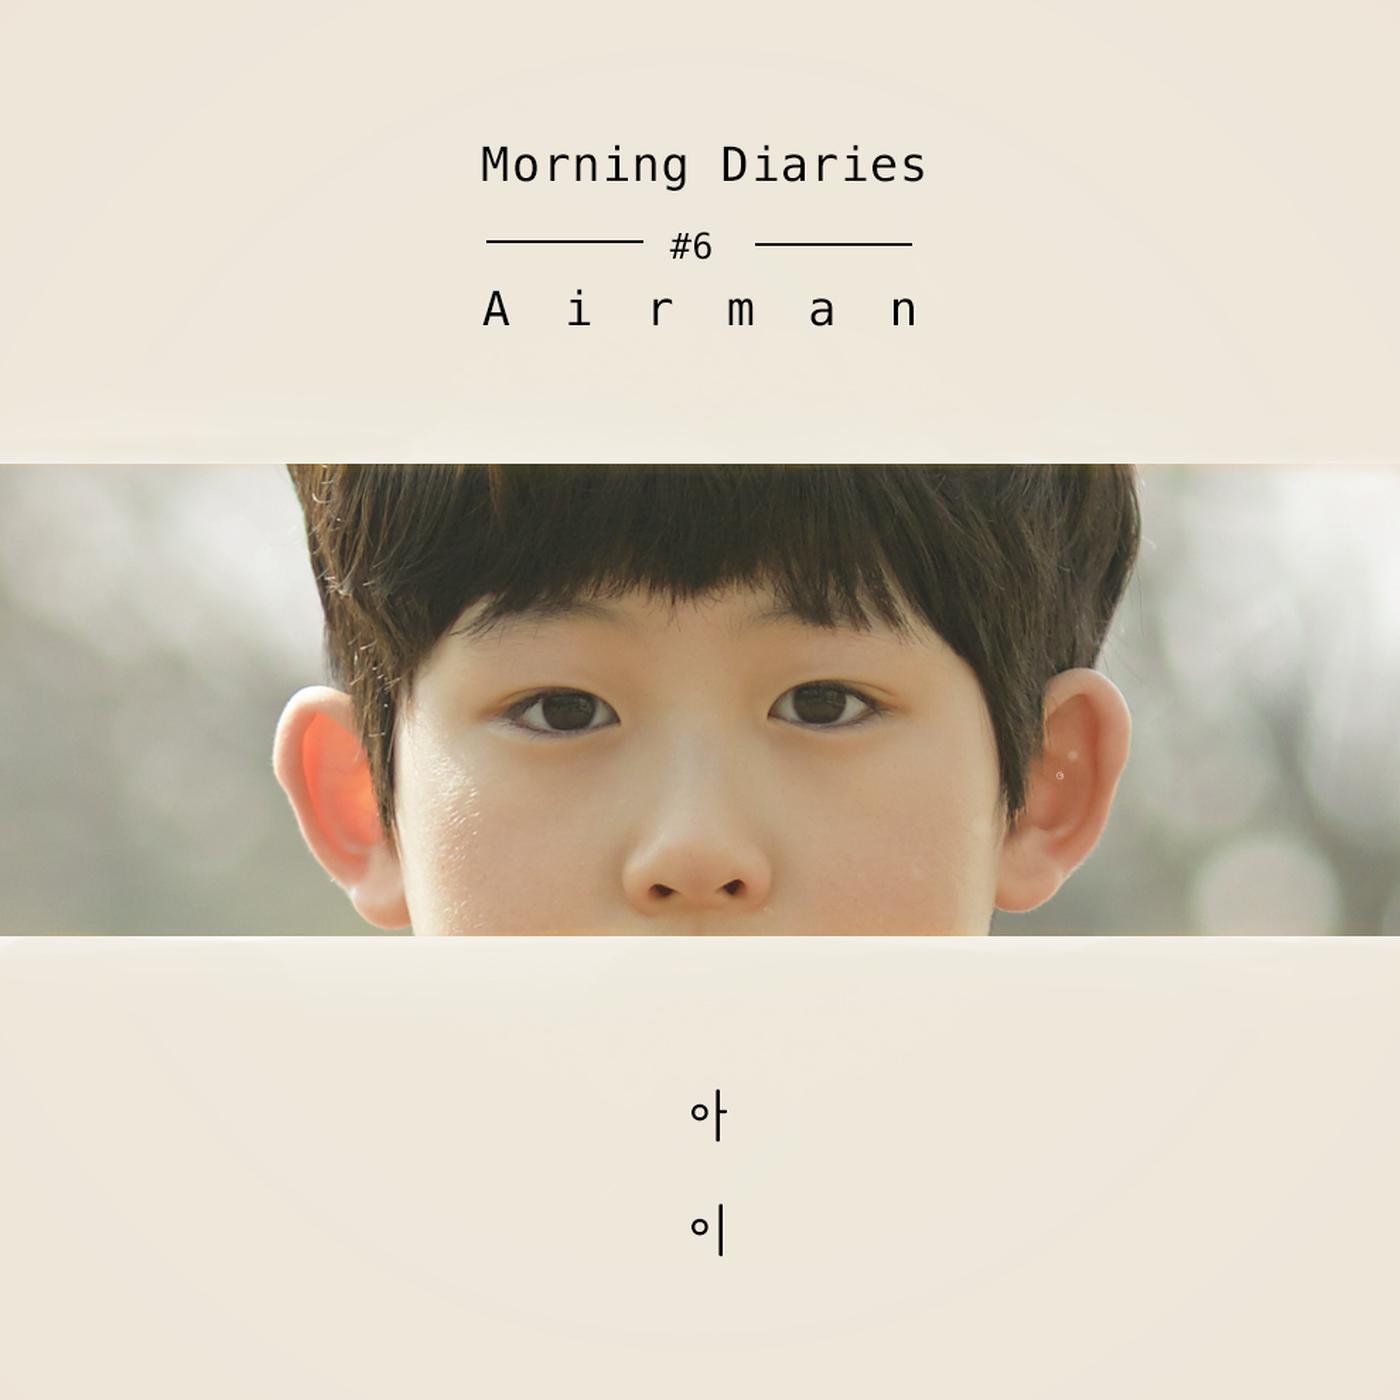 Airman Morning Diaries #6